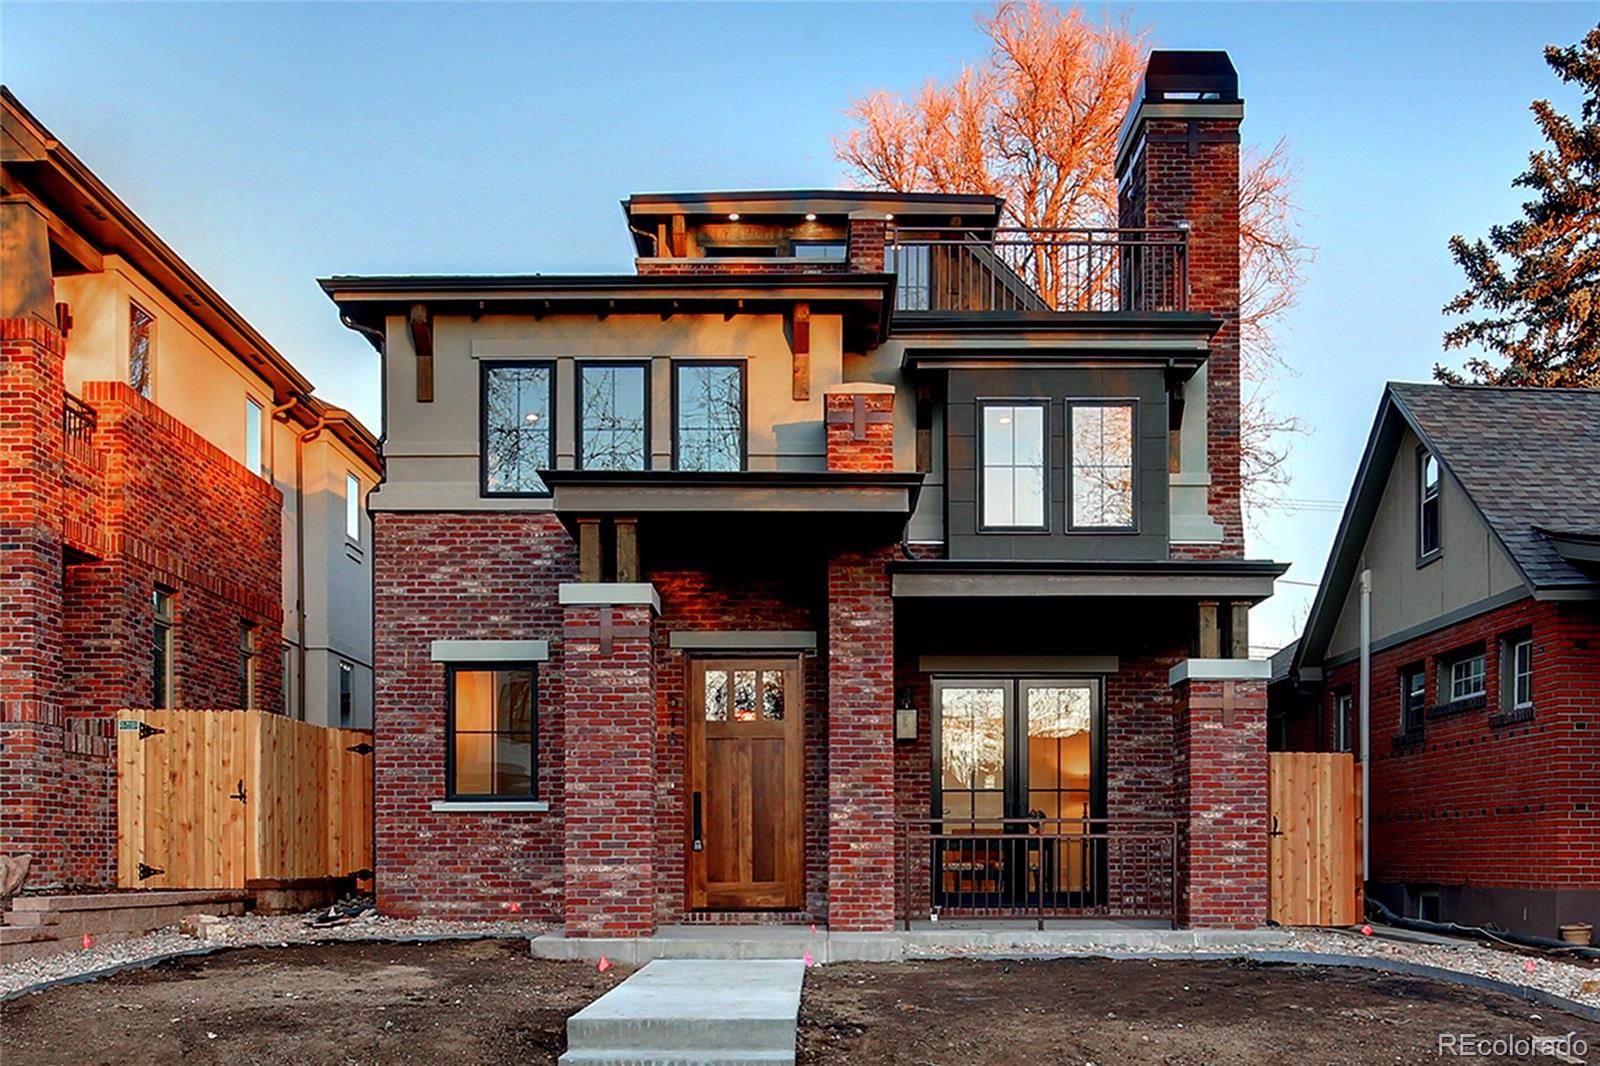 Average Denver Home Prices Reach $674k